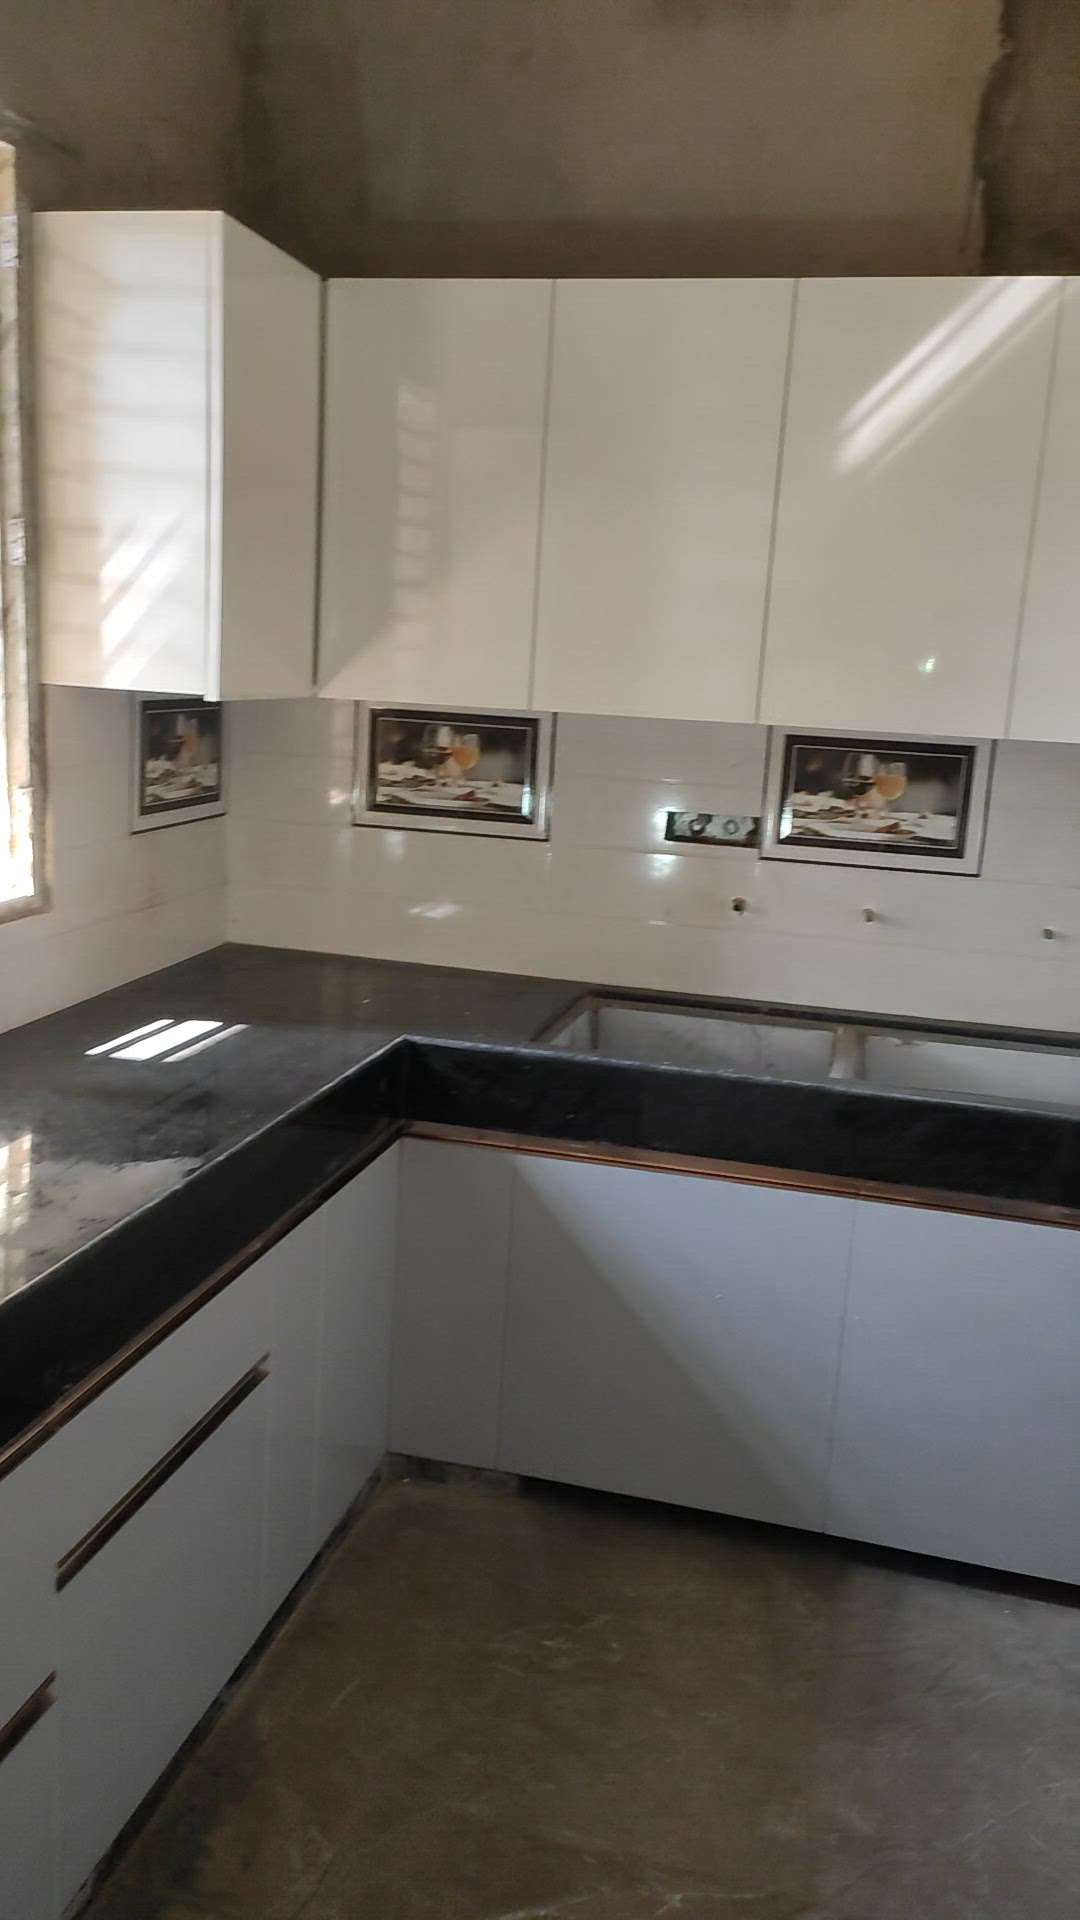 how to modular kitchen design cabinet #akilcarpenter ₹1200 per squire feat modular kitchen design